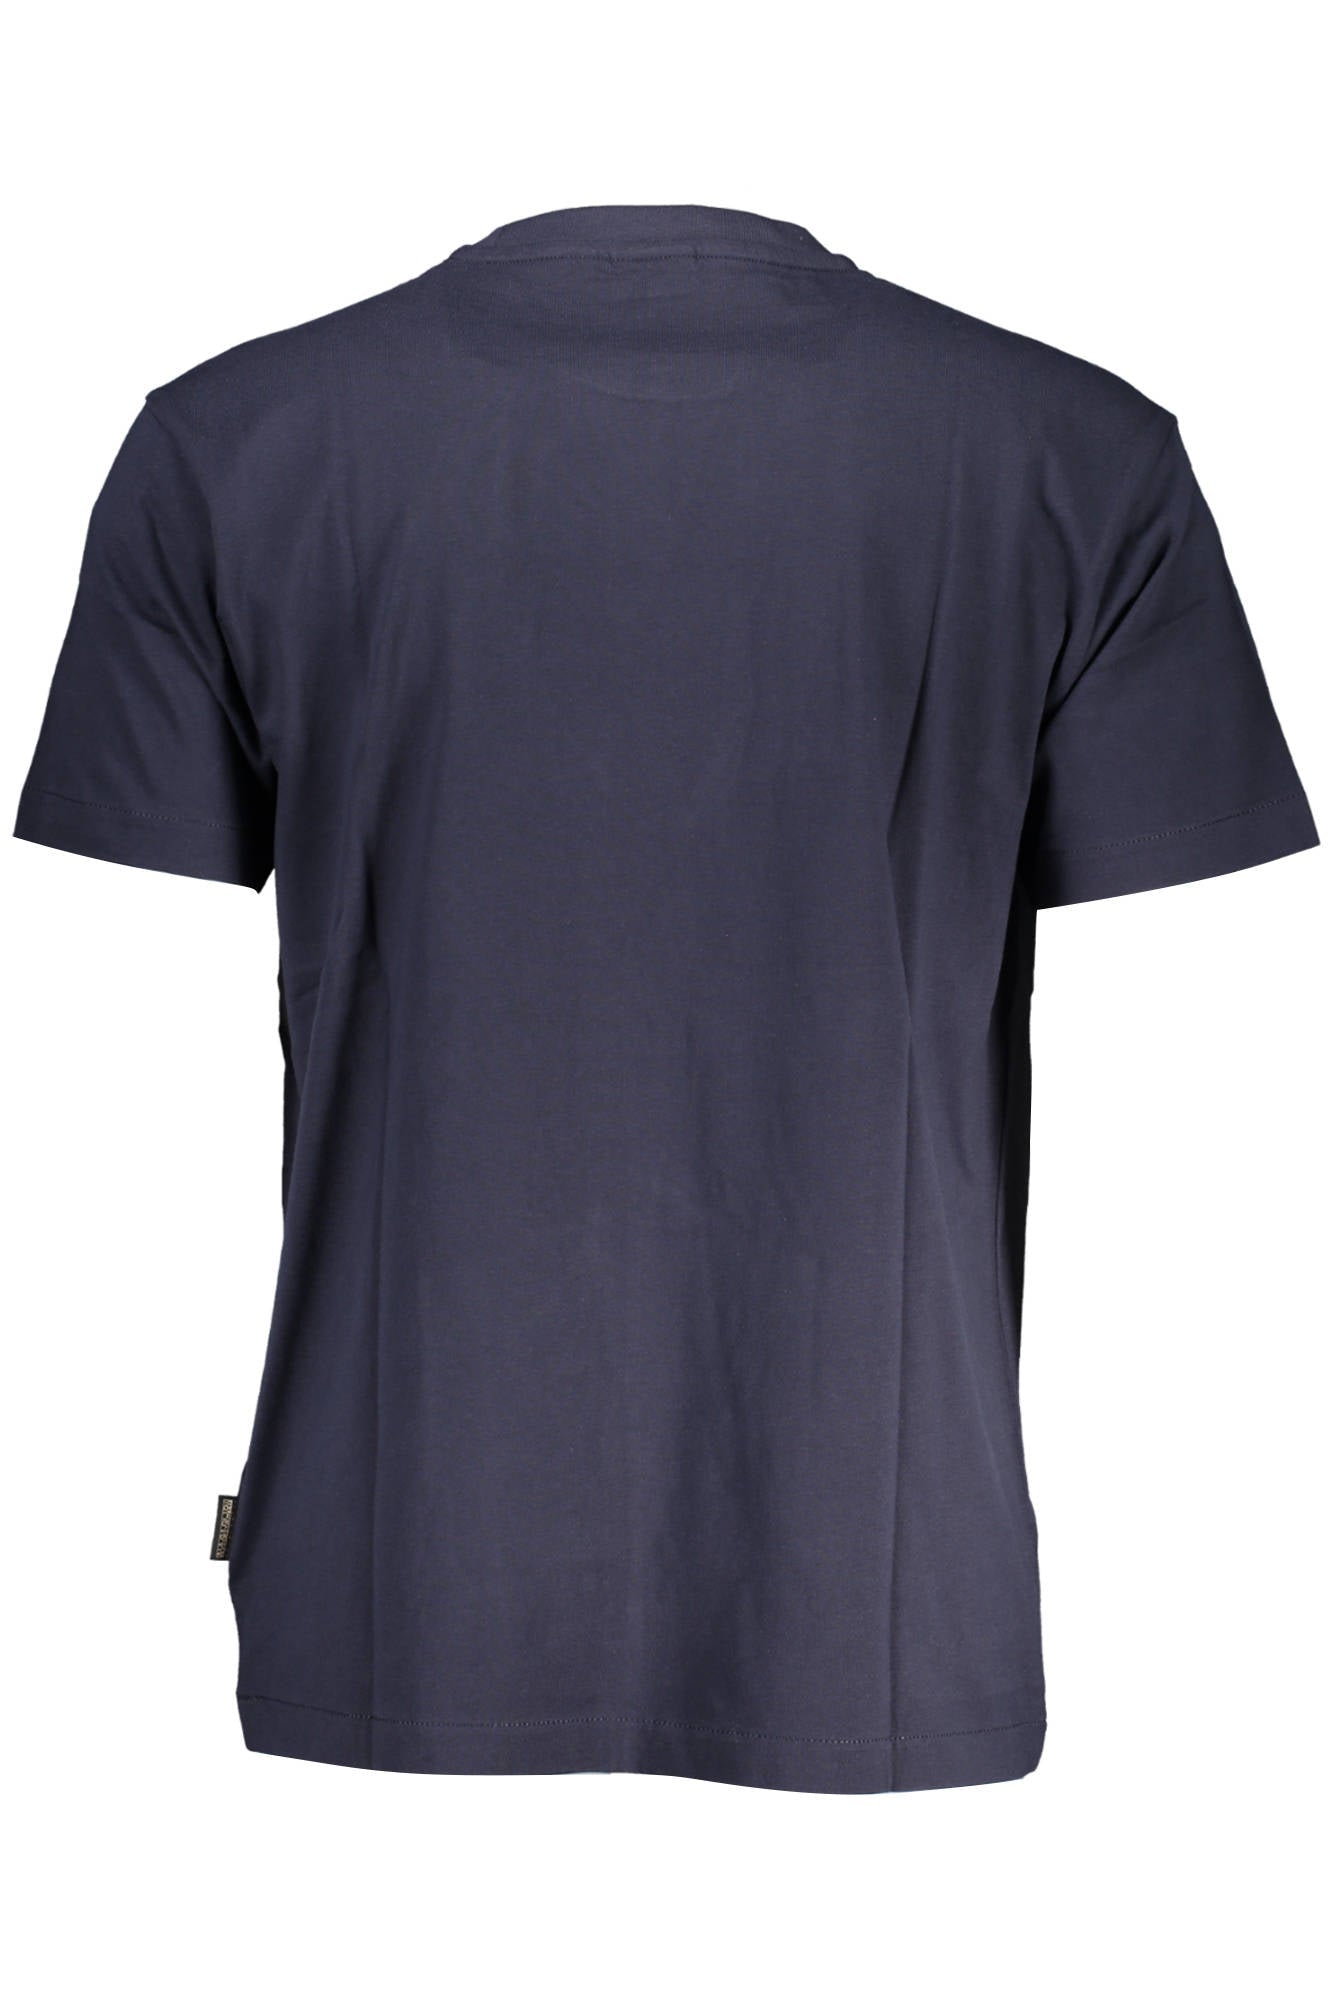 Napapijri Blue Cotton T-Shirt - Fizigo